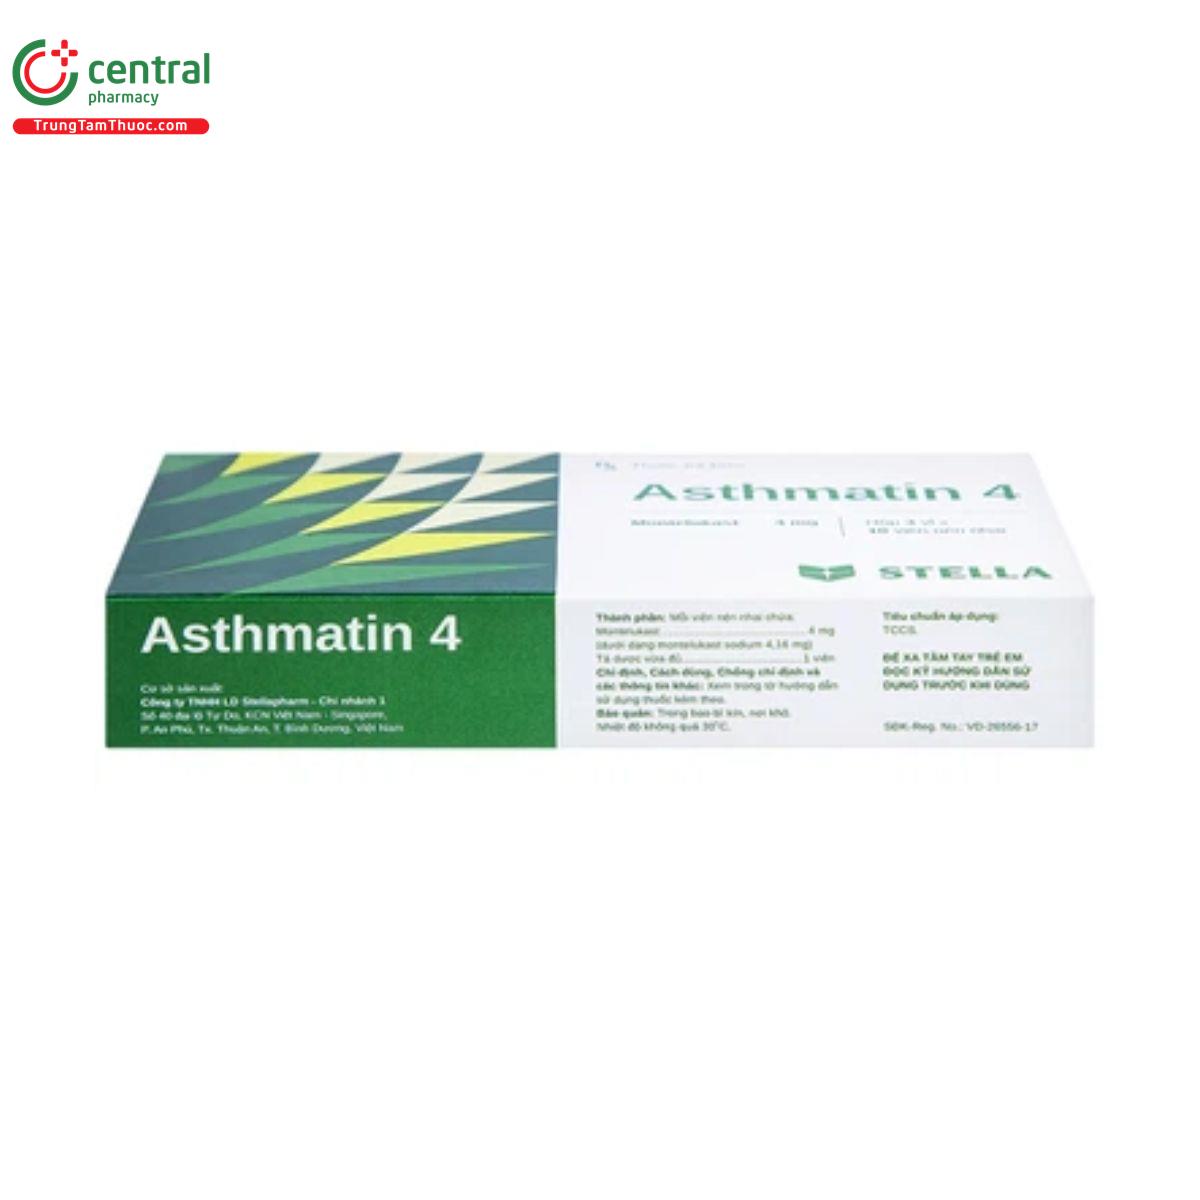 thuoc asthmatin 4 3 R7378